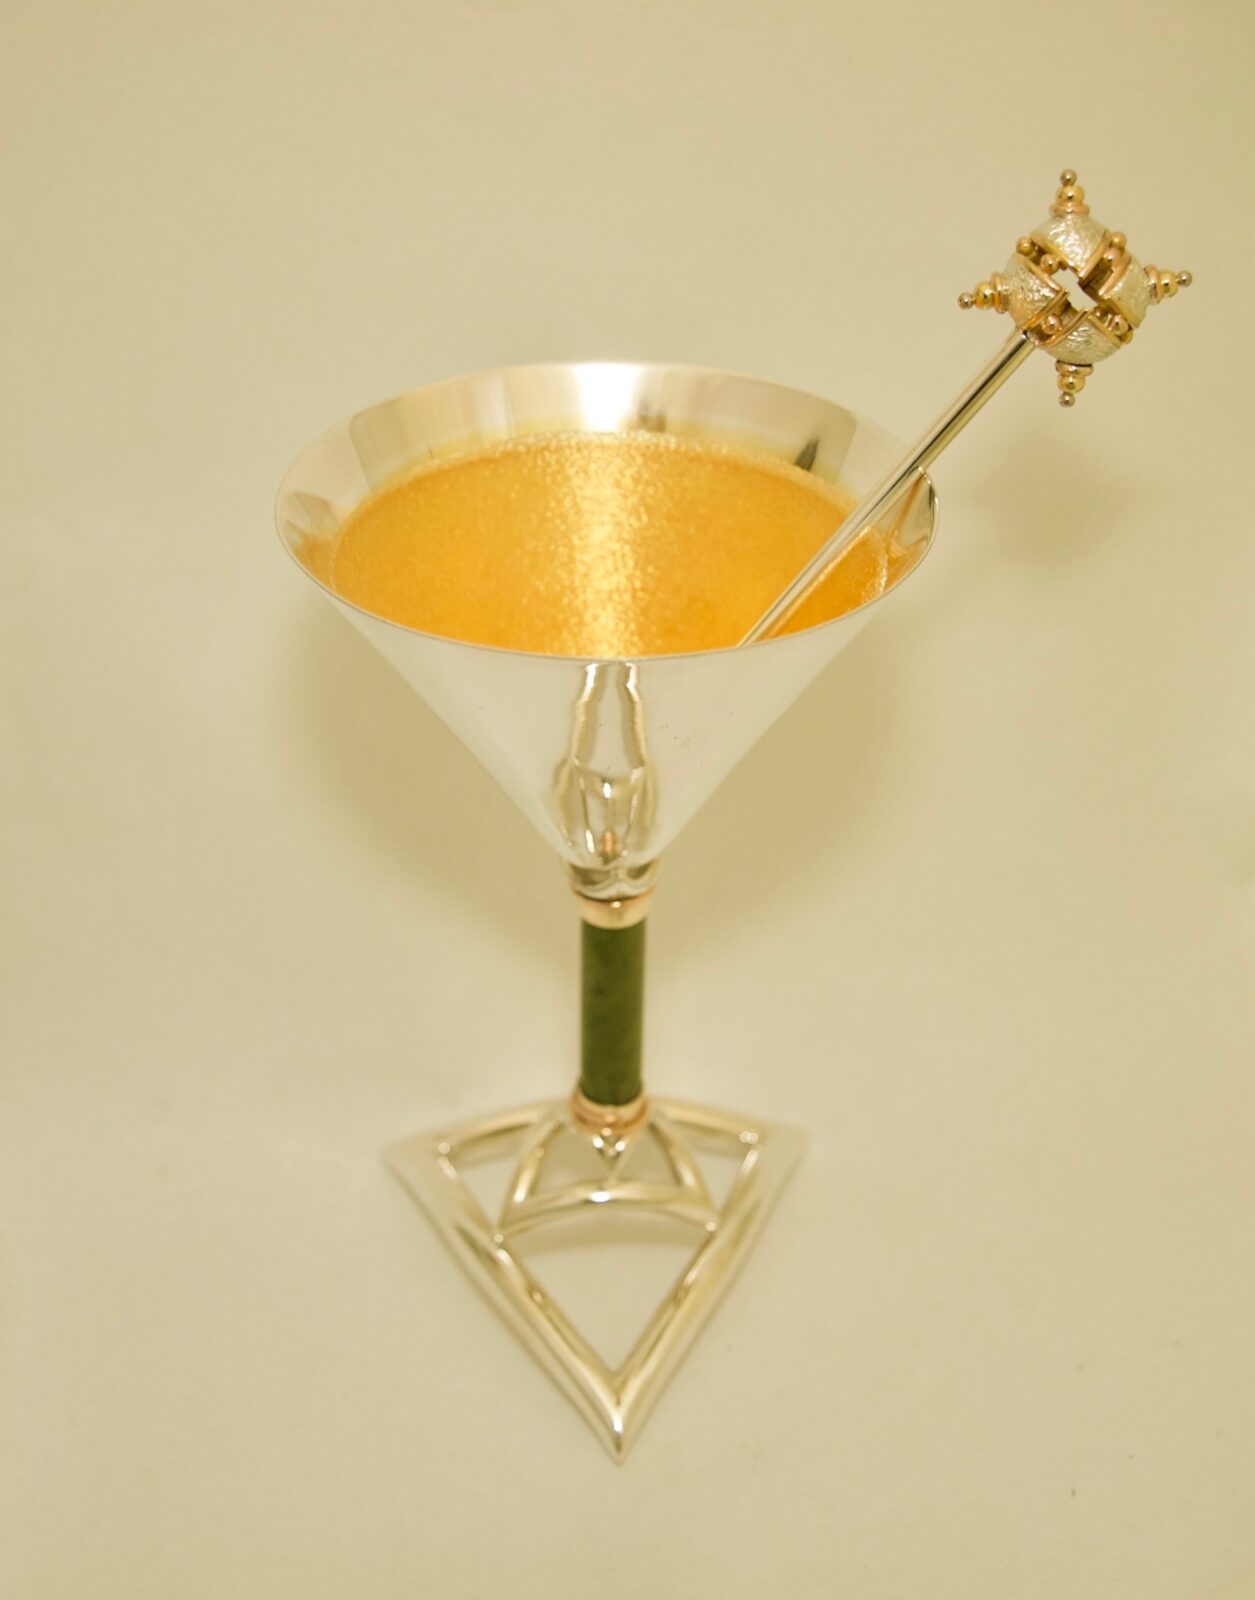 ‘Quarantini’ (martini glass and corona virus swizzle stick)